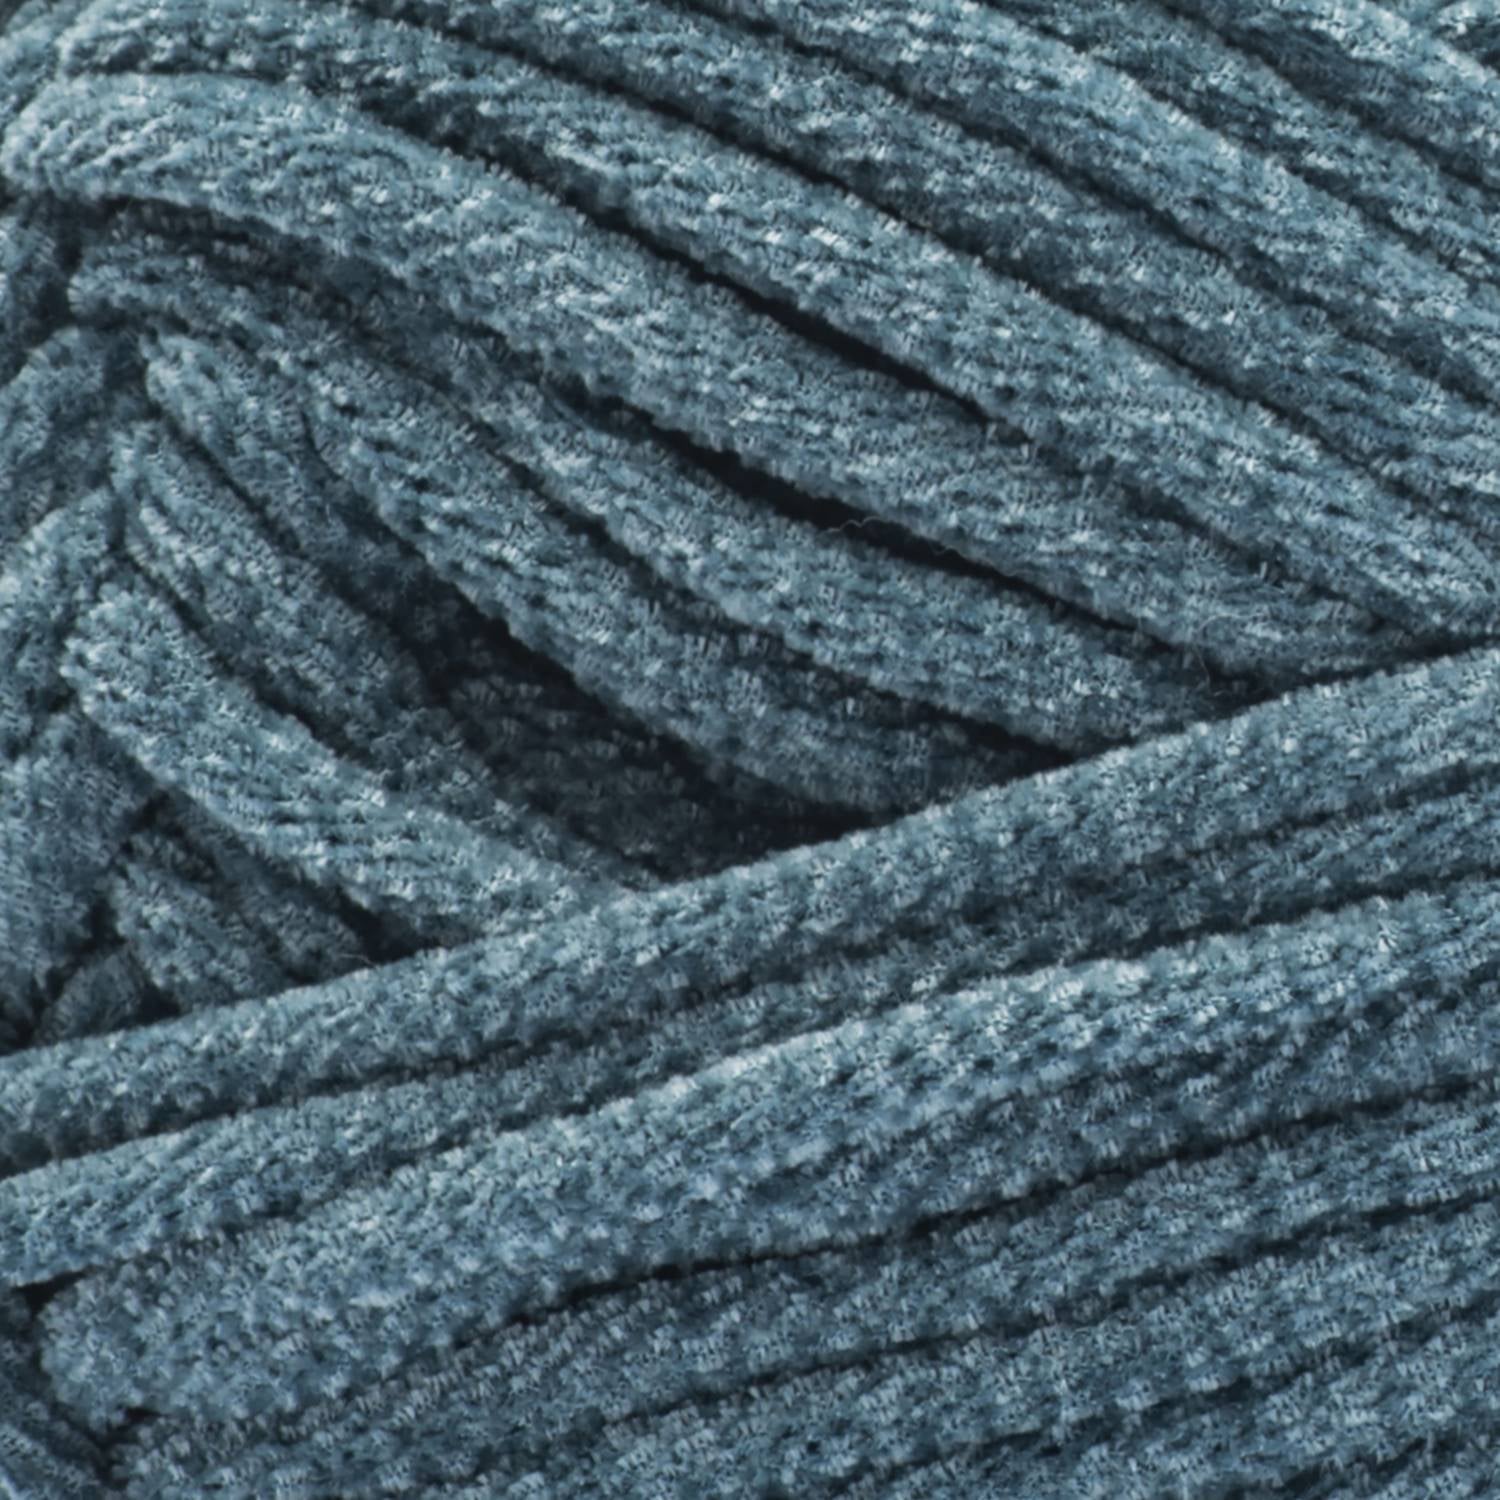 Bernat Plush Knitting Yarn in Ruby | Size: 250gr/8.8oz | Pattern: Knit | by Yarnspirations